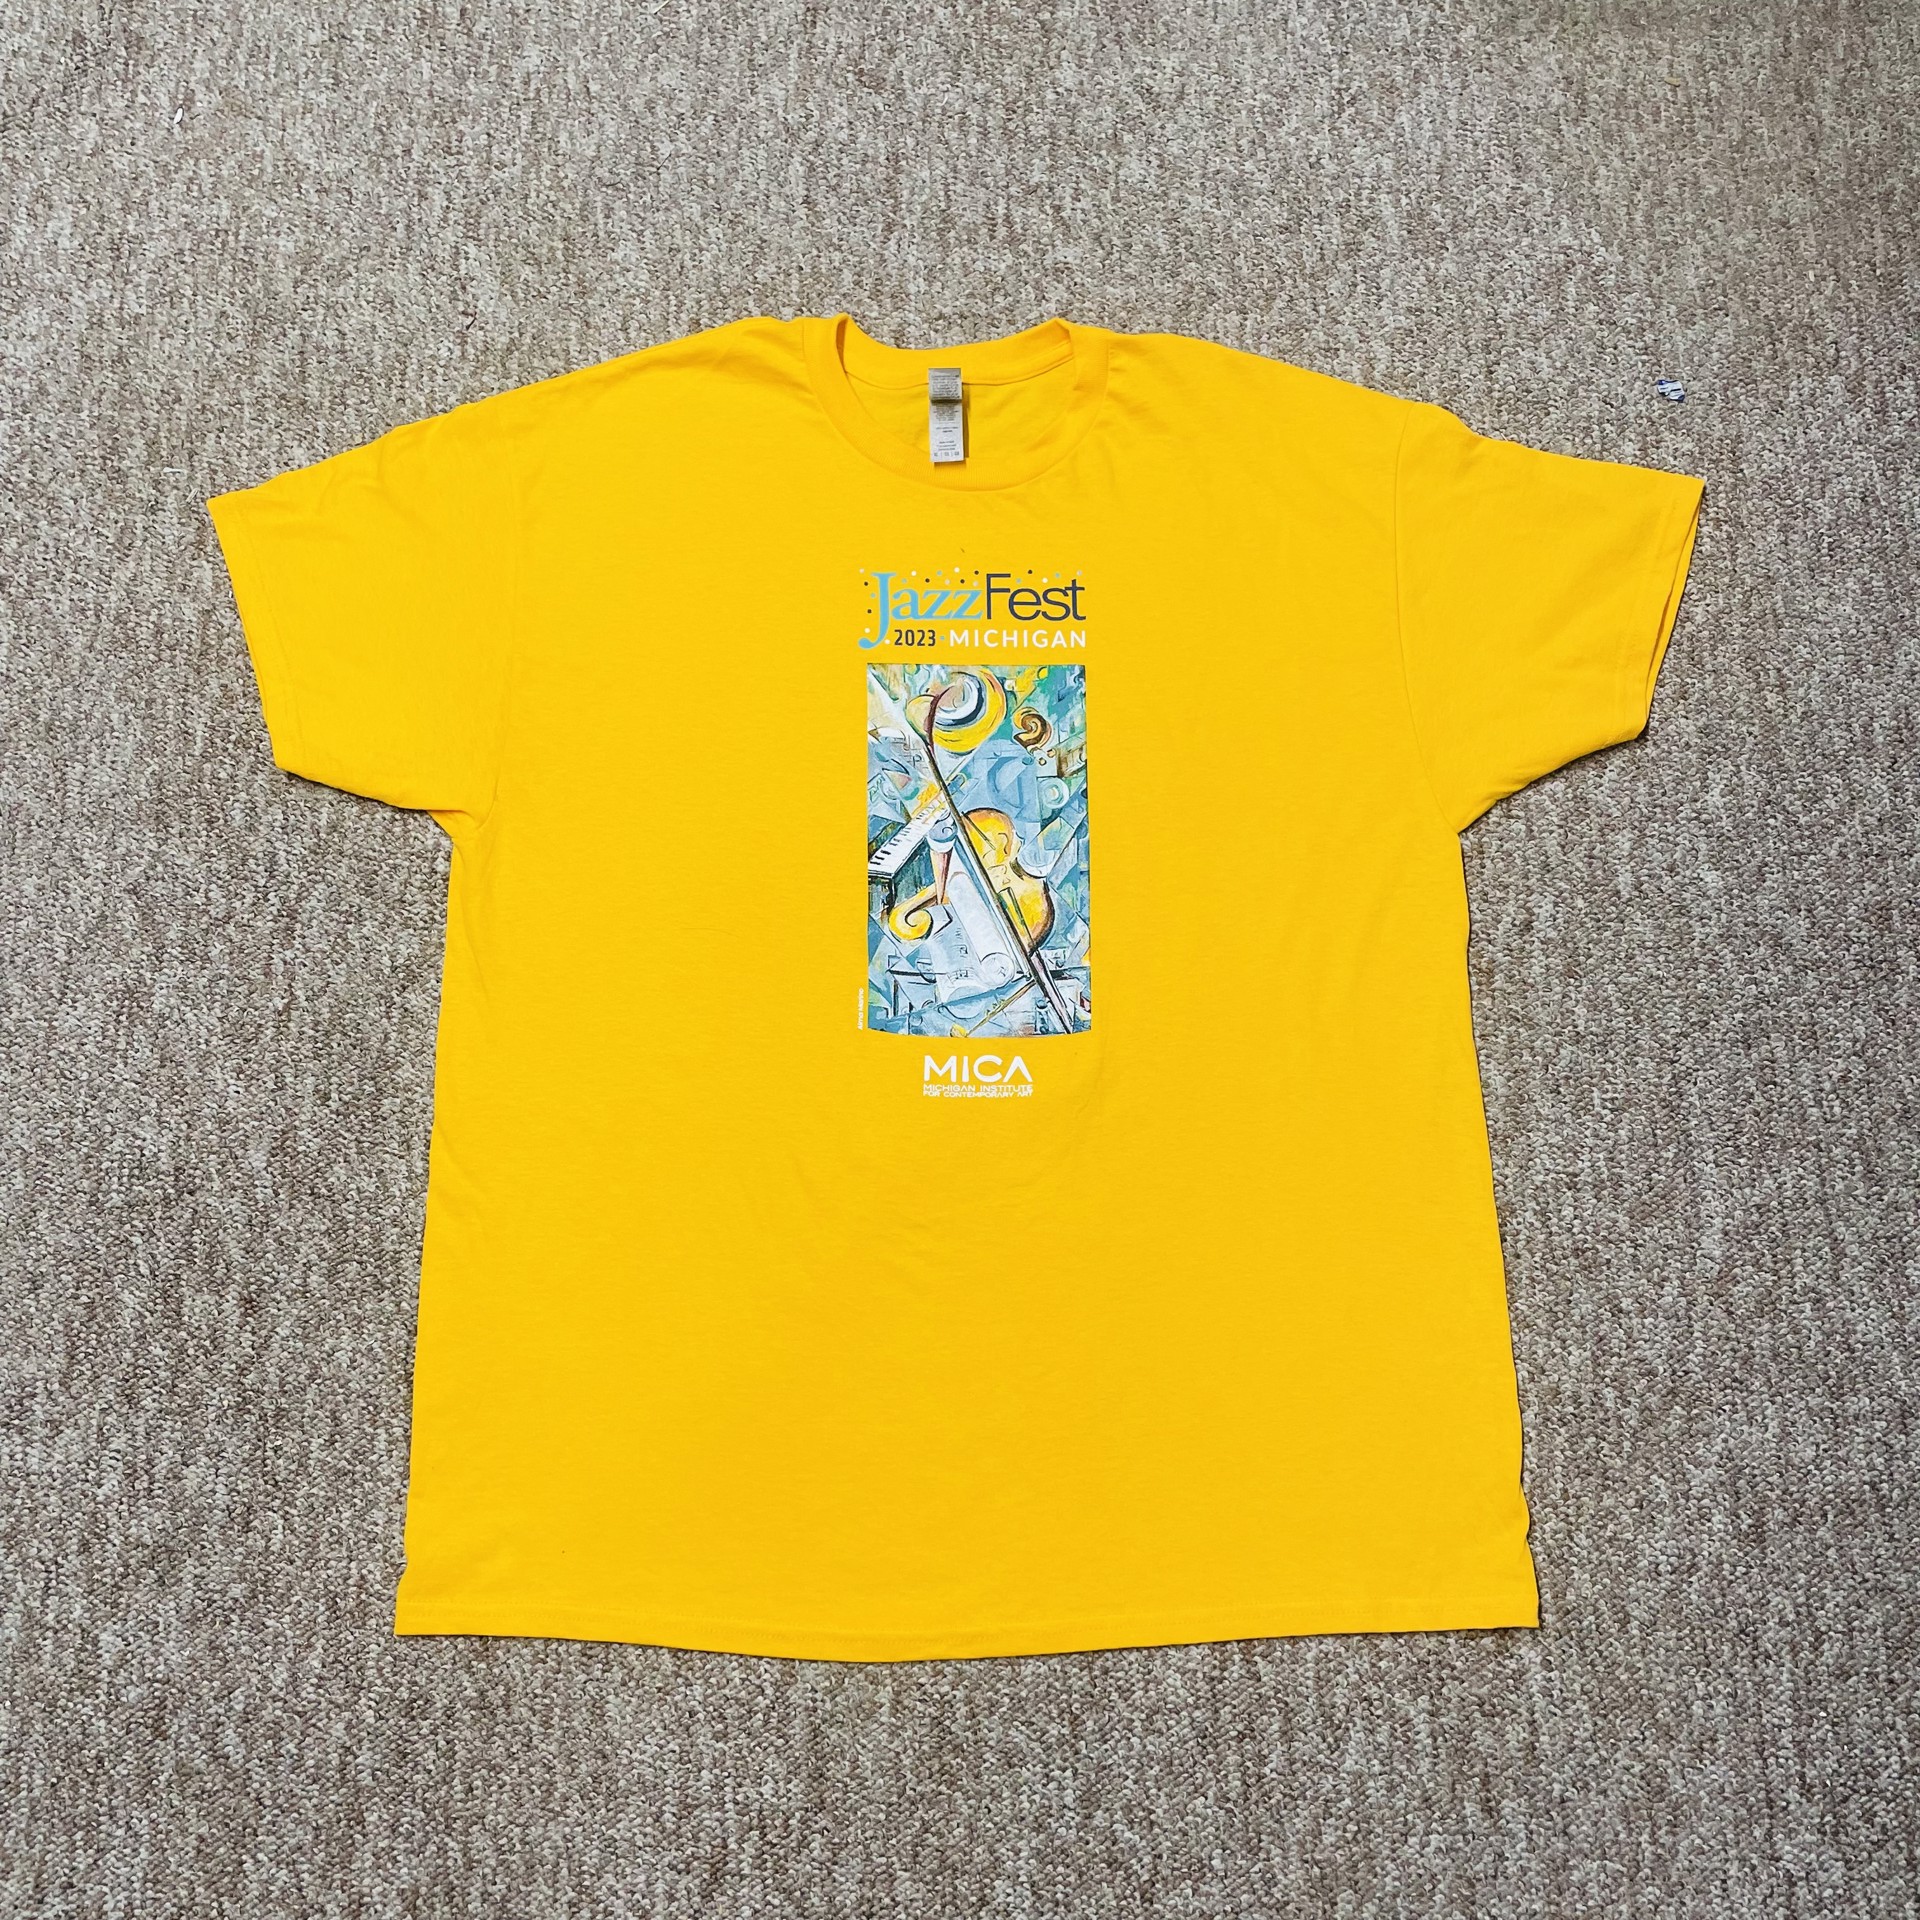 JazzFest T-shirt (yellow)